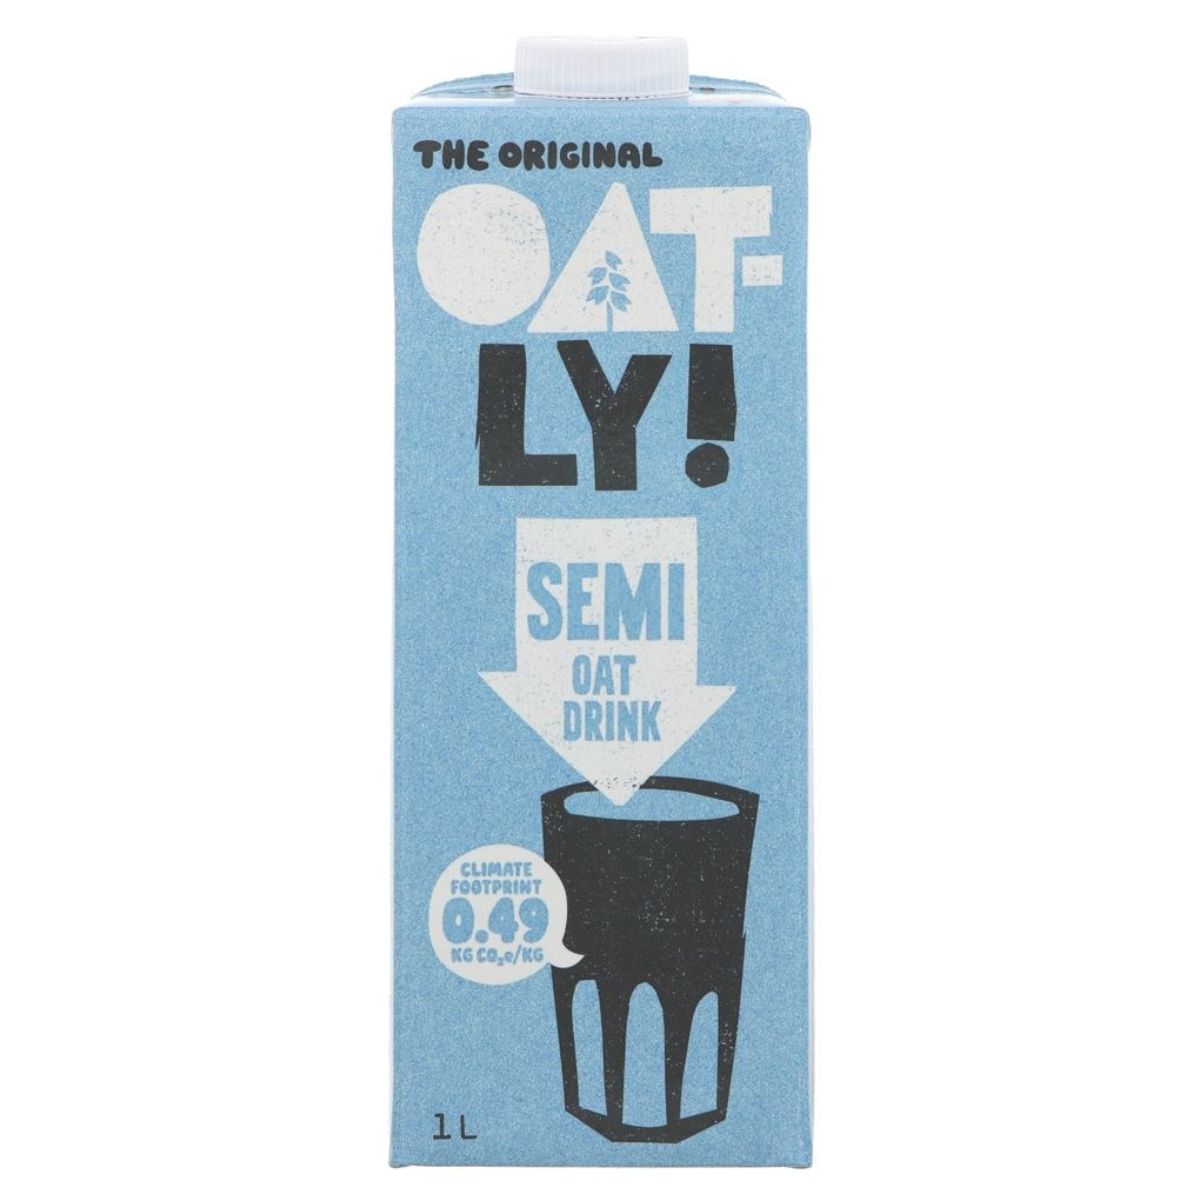 The original Oatly - Semi Skimmed Oat Drink - 1L.